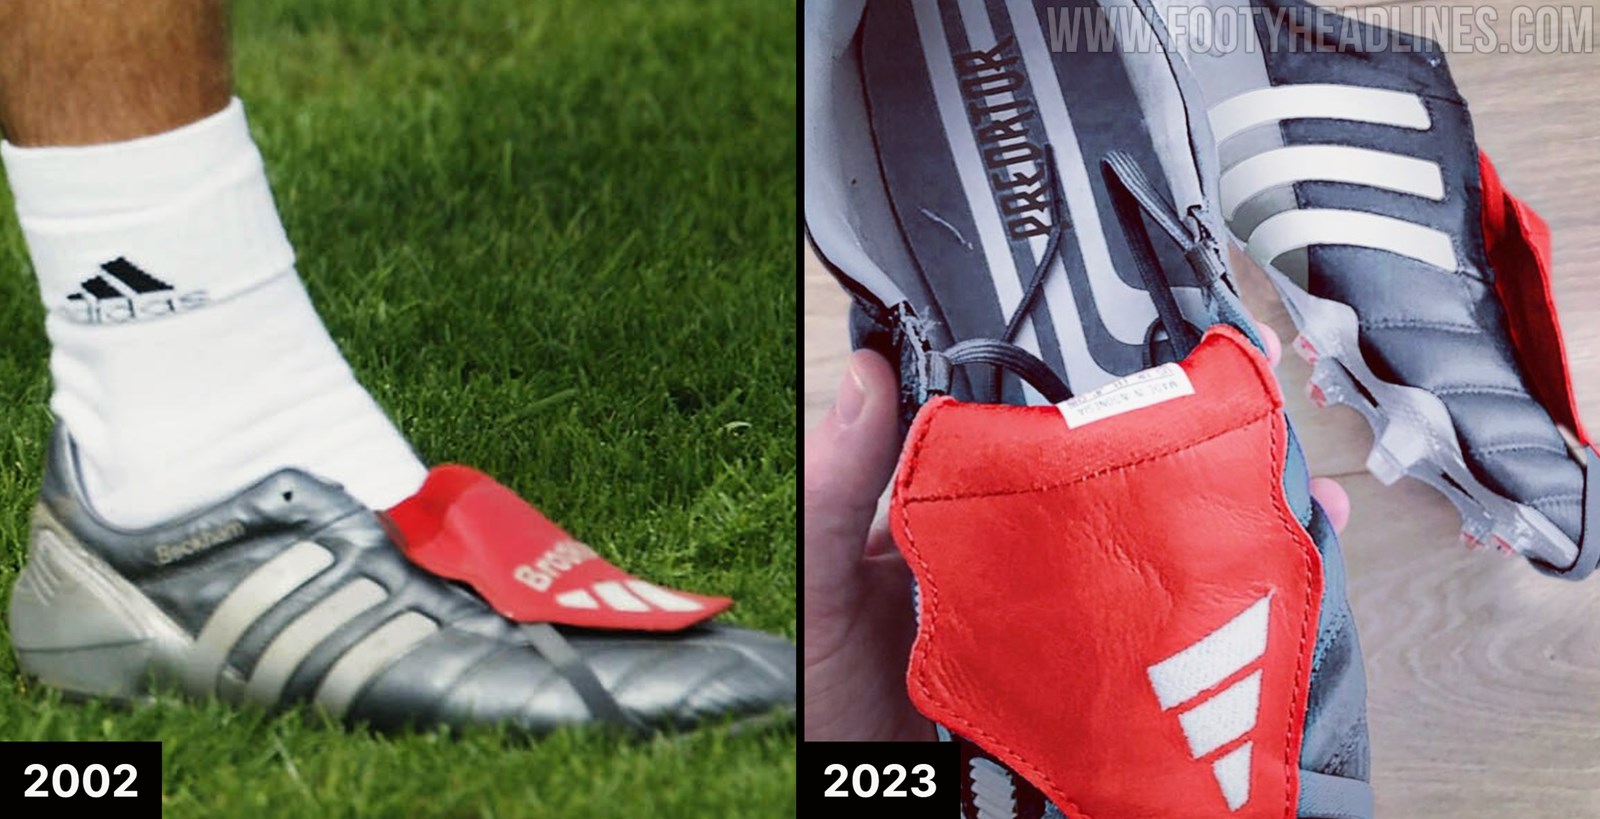 vuist Gedrag Dijk Adidas Predator Mania "Gunmetal" 2023 Remake Boots - April Fool's Joke -  Footy Headlines